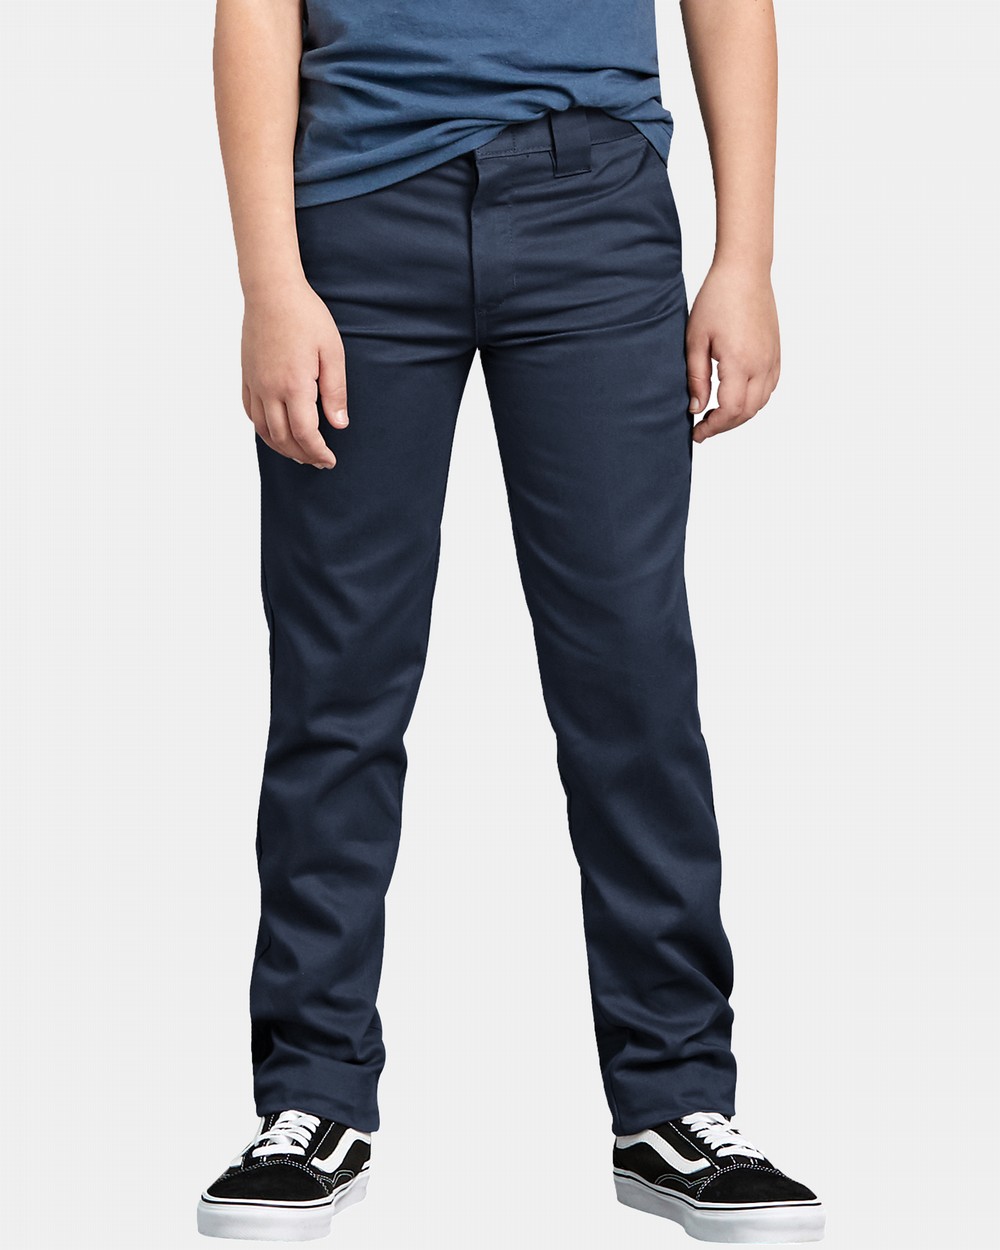 Buy Urbano Juniors Boys Slim Jeans junepsboyblack45Black at Amazonin